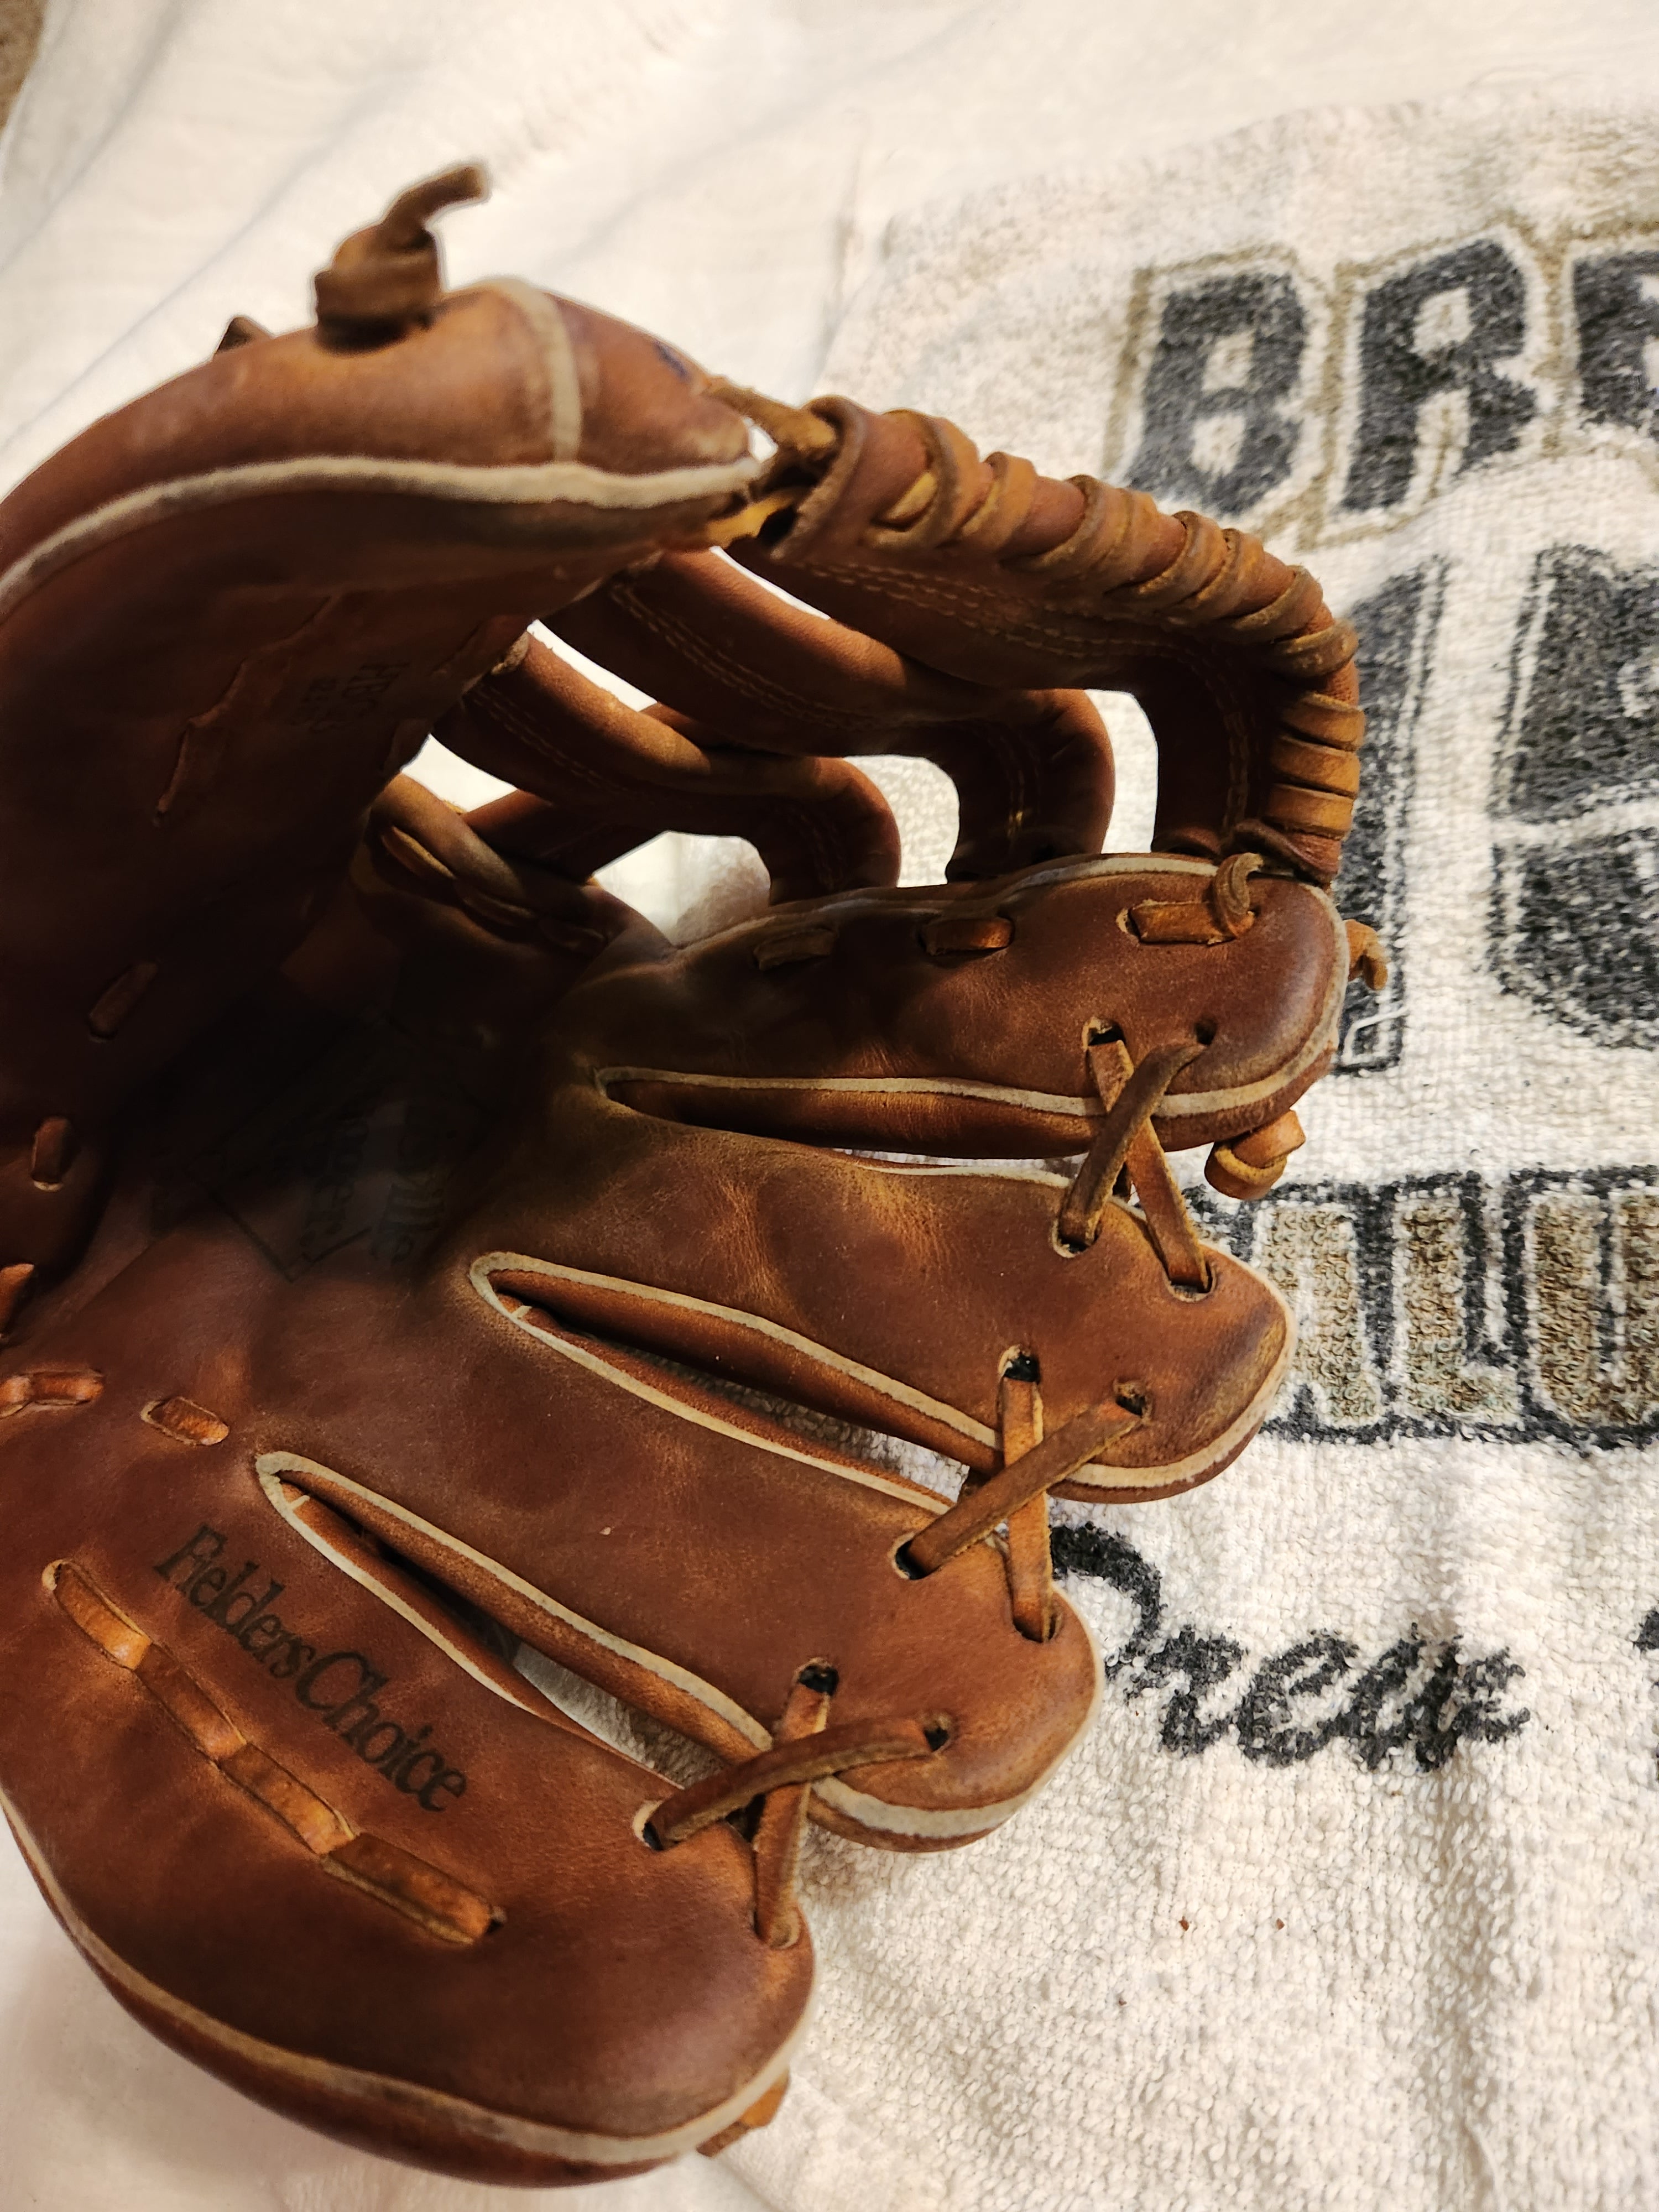 Louisville Slugger Baseball Glove Foldover Wallet - Game Day Feels